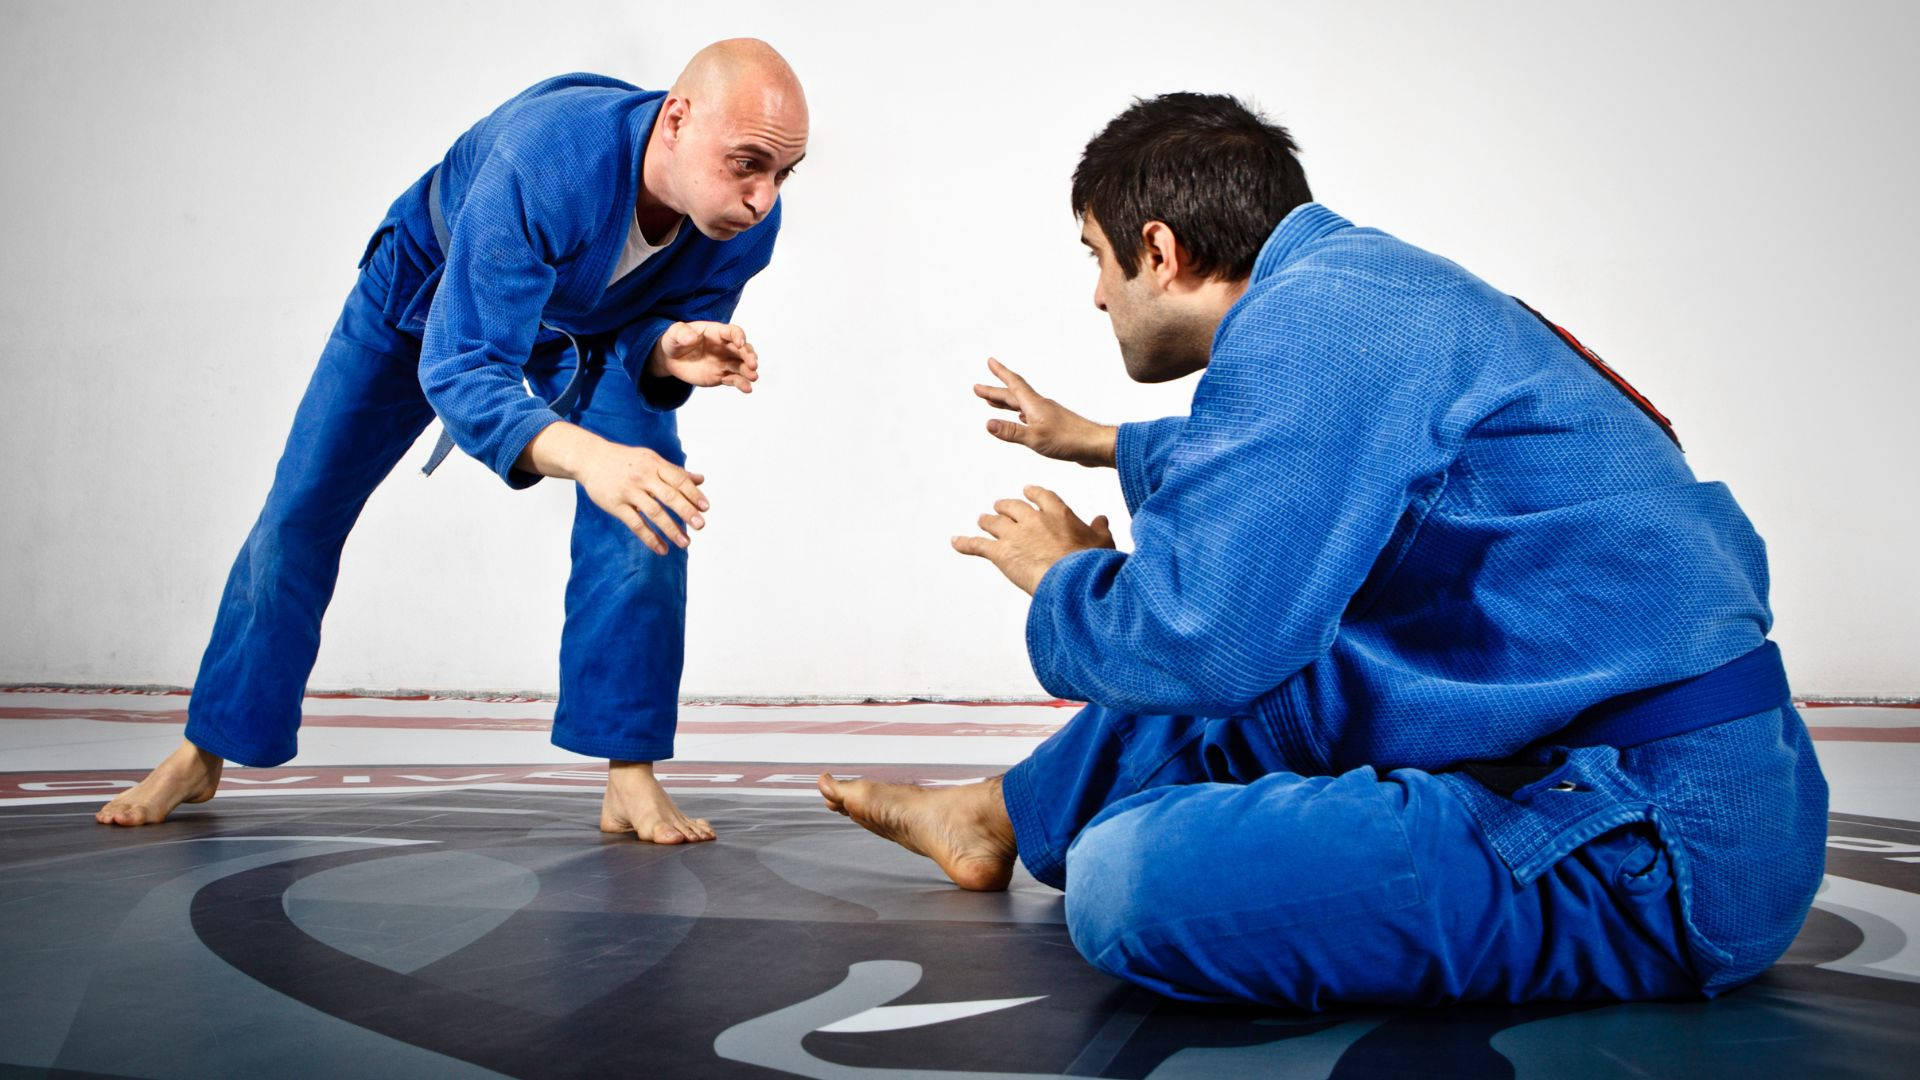 Athletic Brazilian Jiu-jitsu Fighter In Action Background